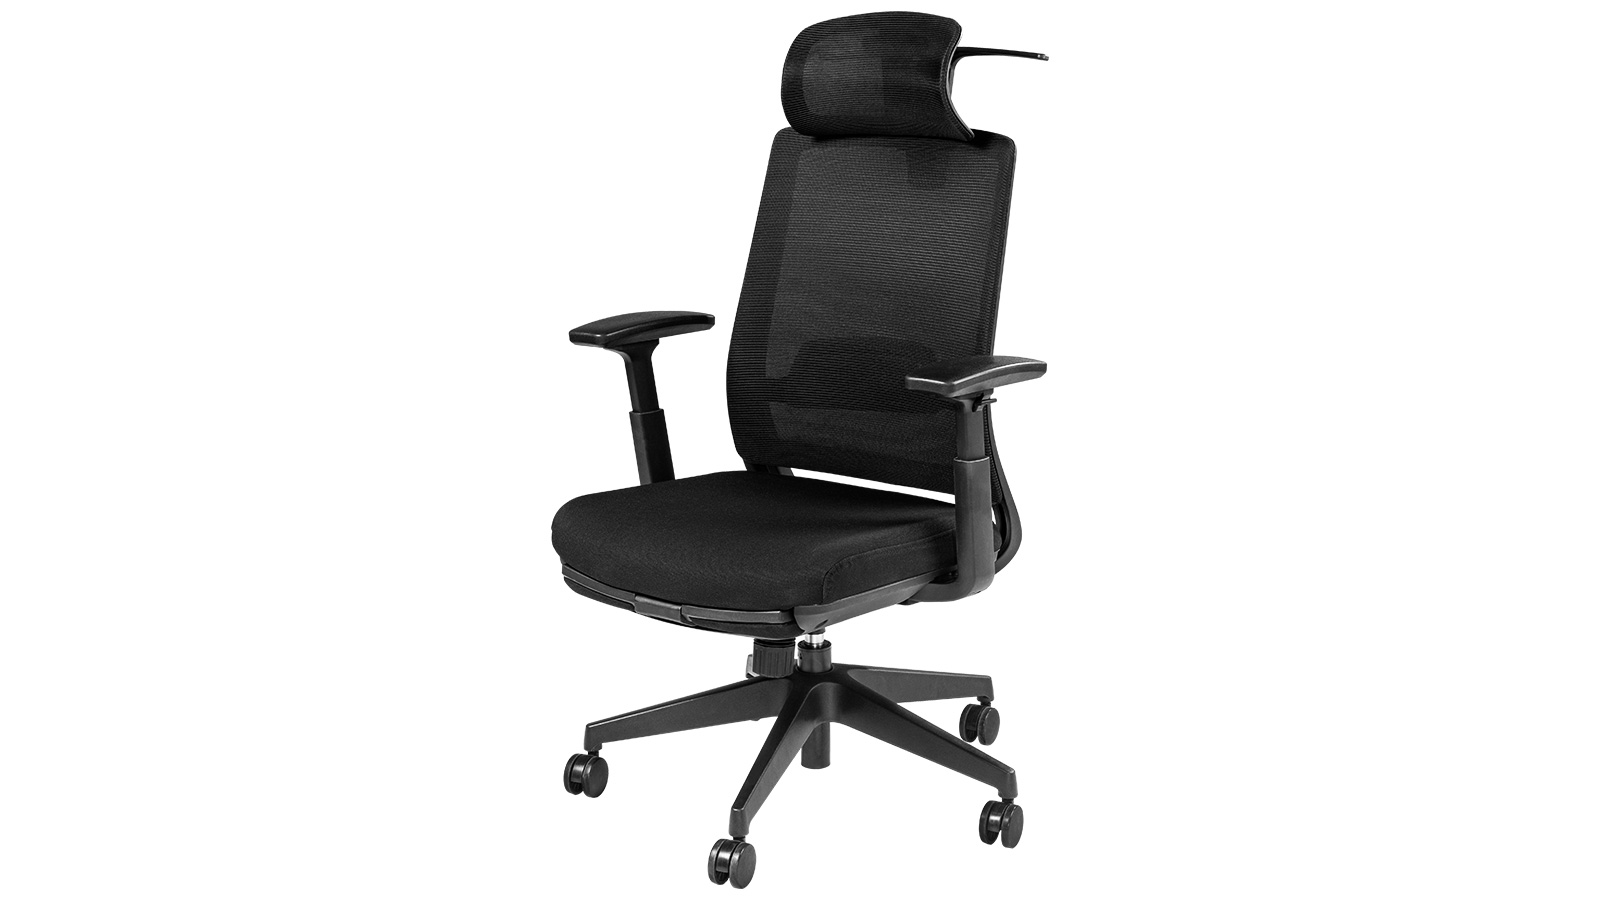 Finercrafts The Office Chair: Headrest and Legrest